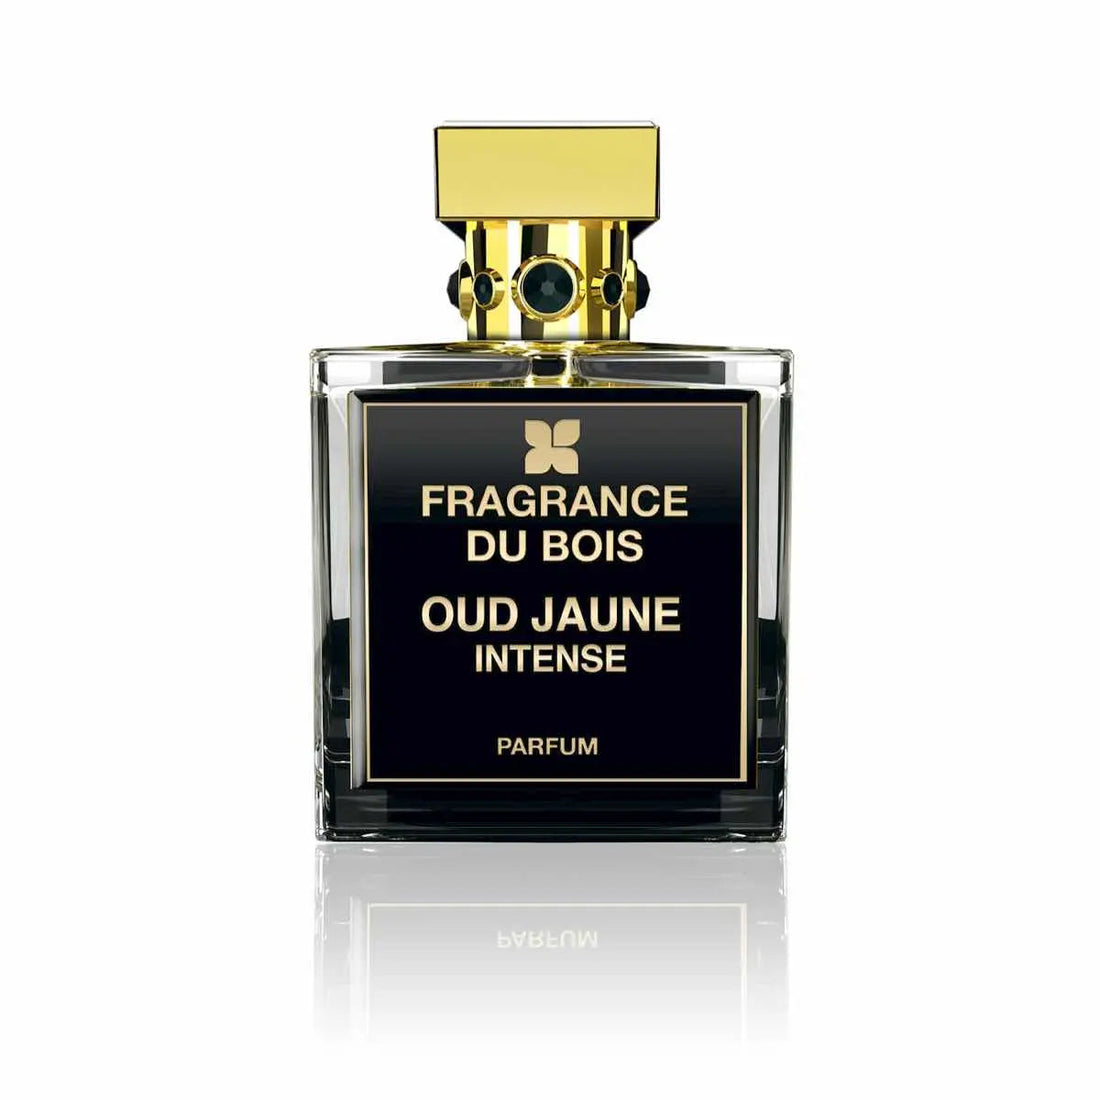 Аромат du bois Oud Jaune parfum - 50 мл